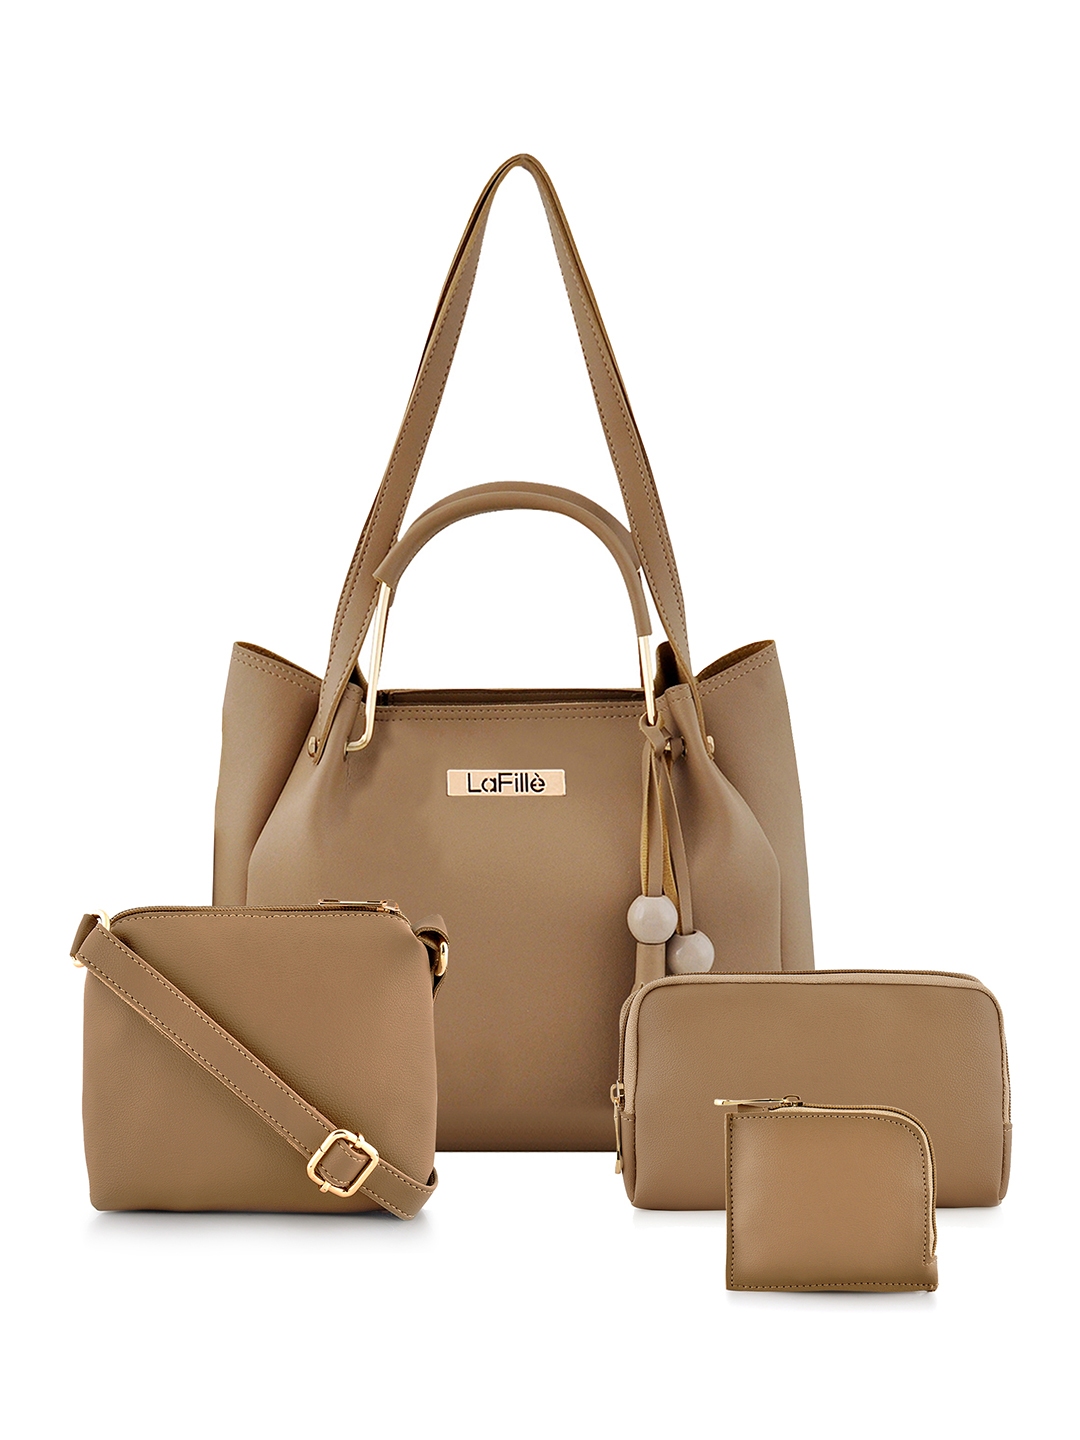 LaFille Women's Handbags, Ladies Shoulder Bags